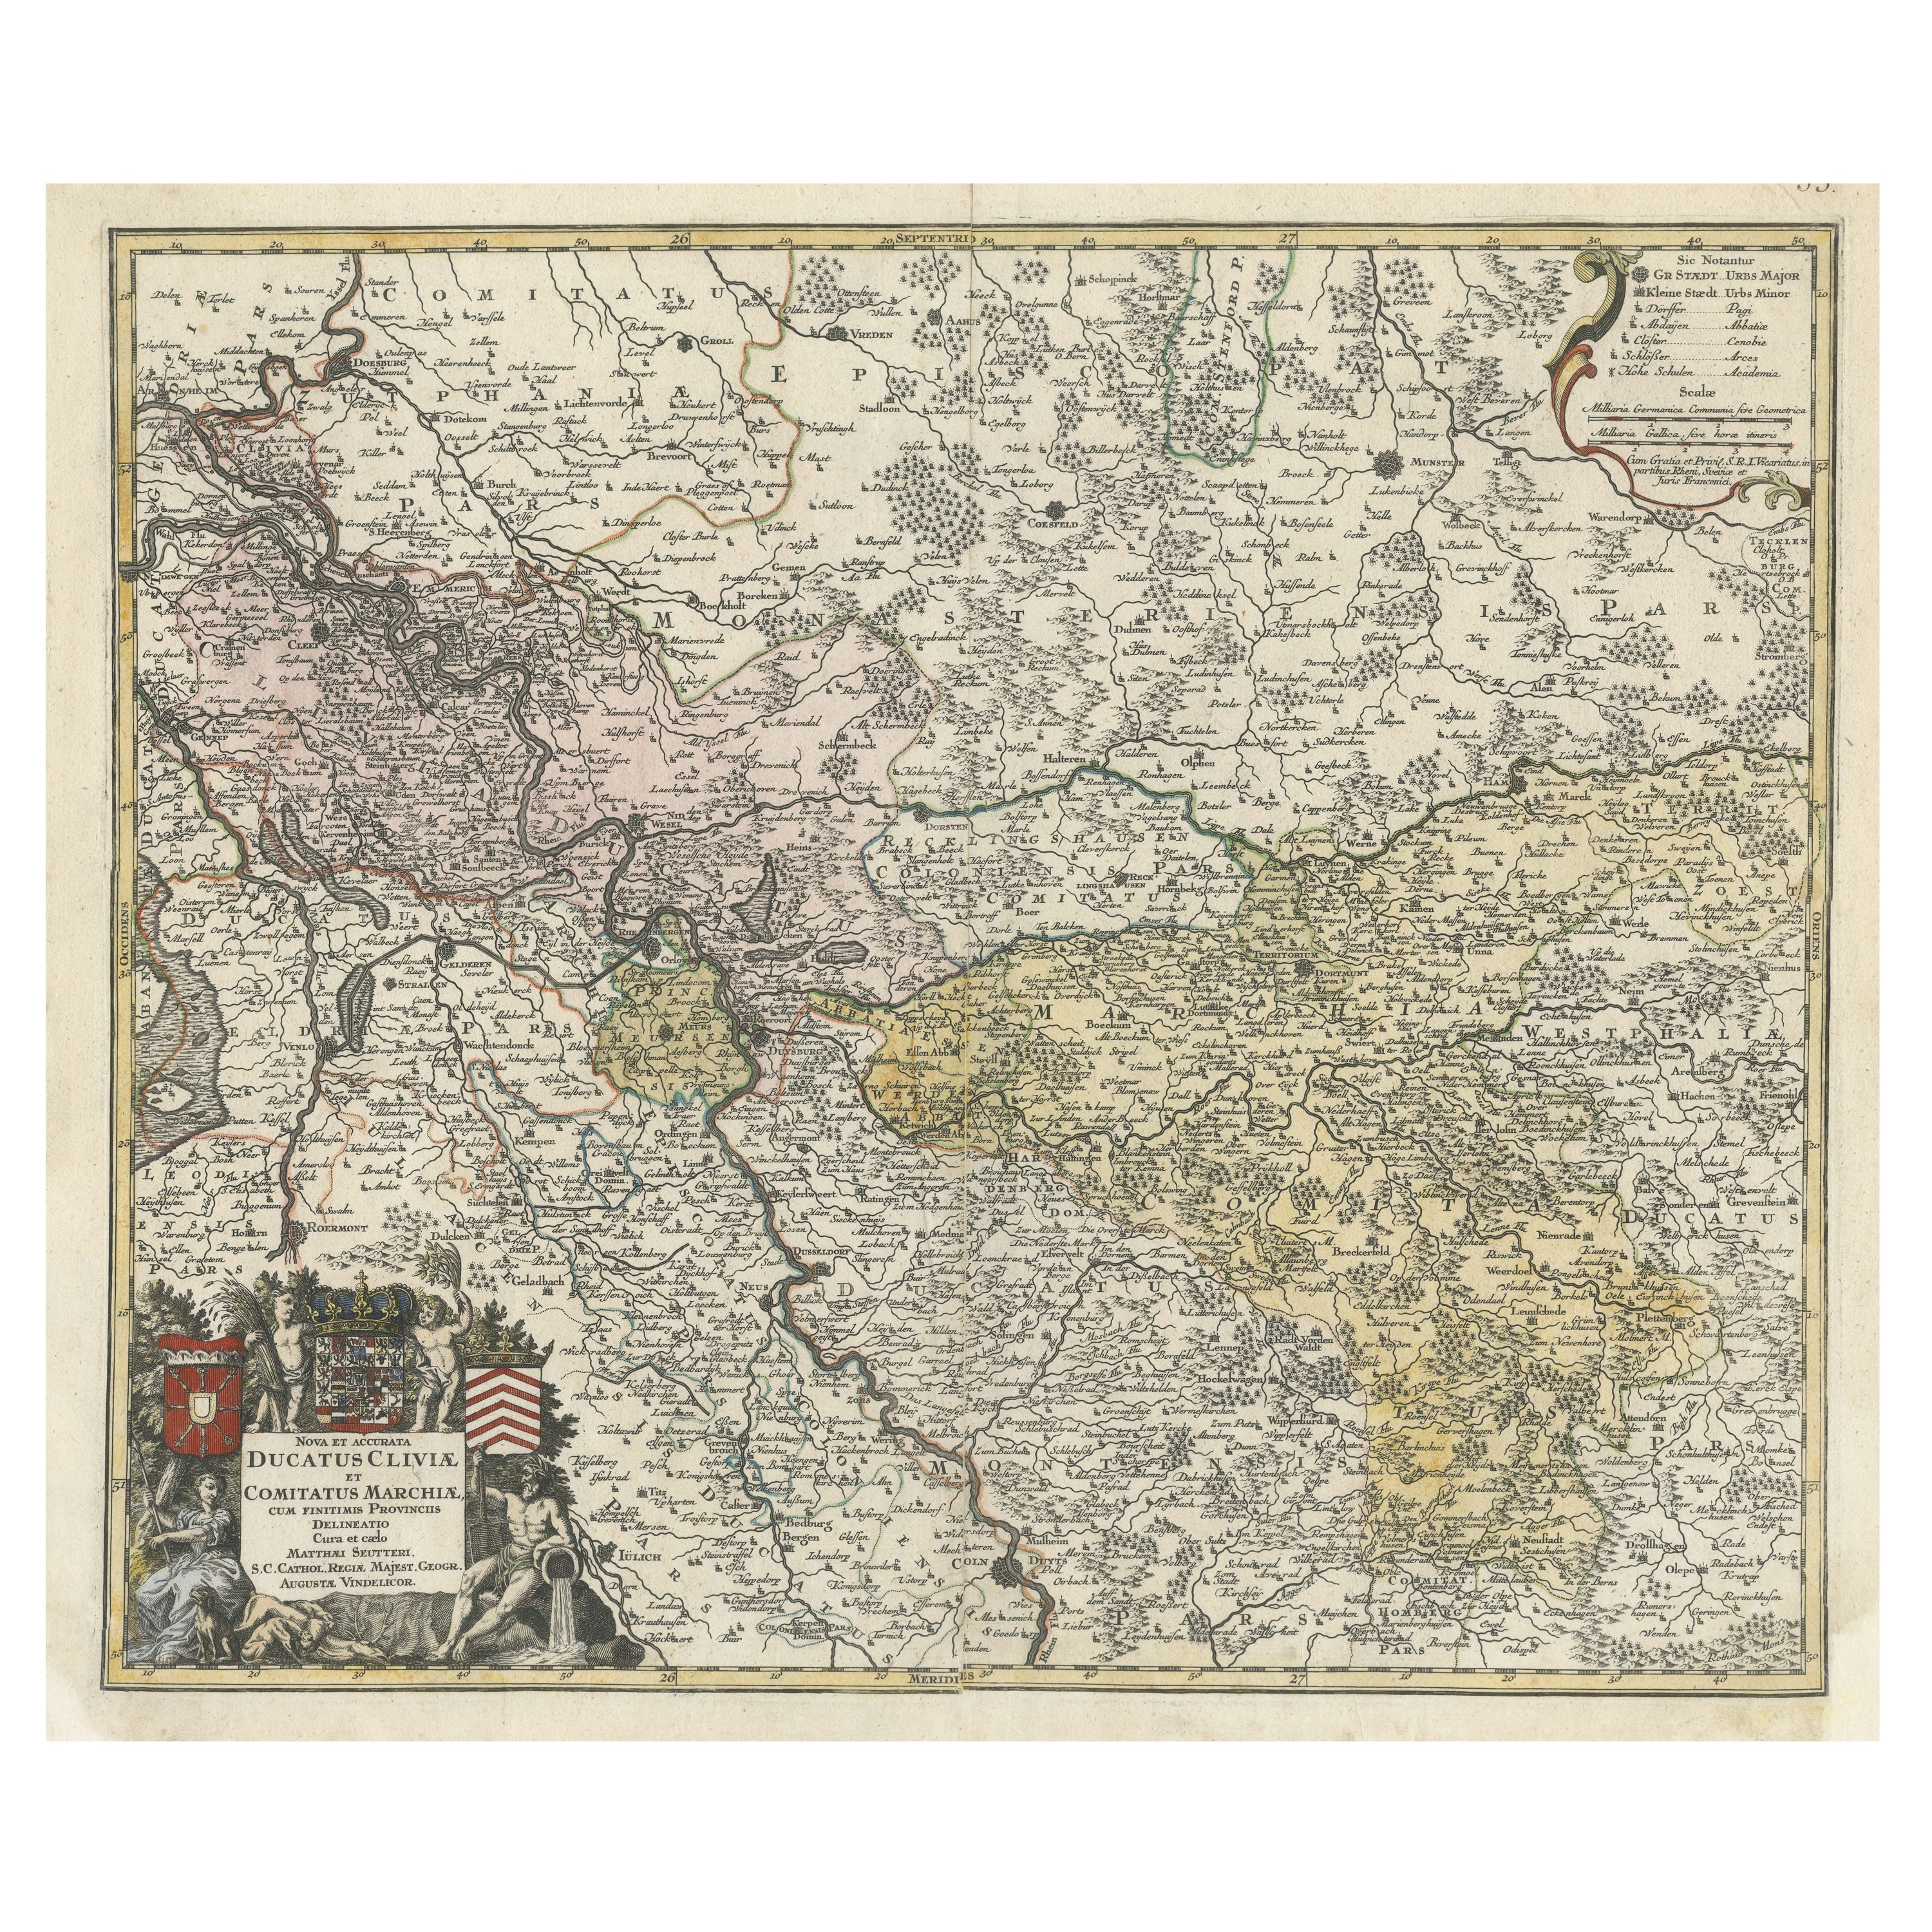 Antique Map of present-day North-Rhine Westphalia, Germany